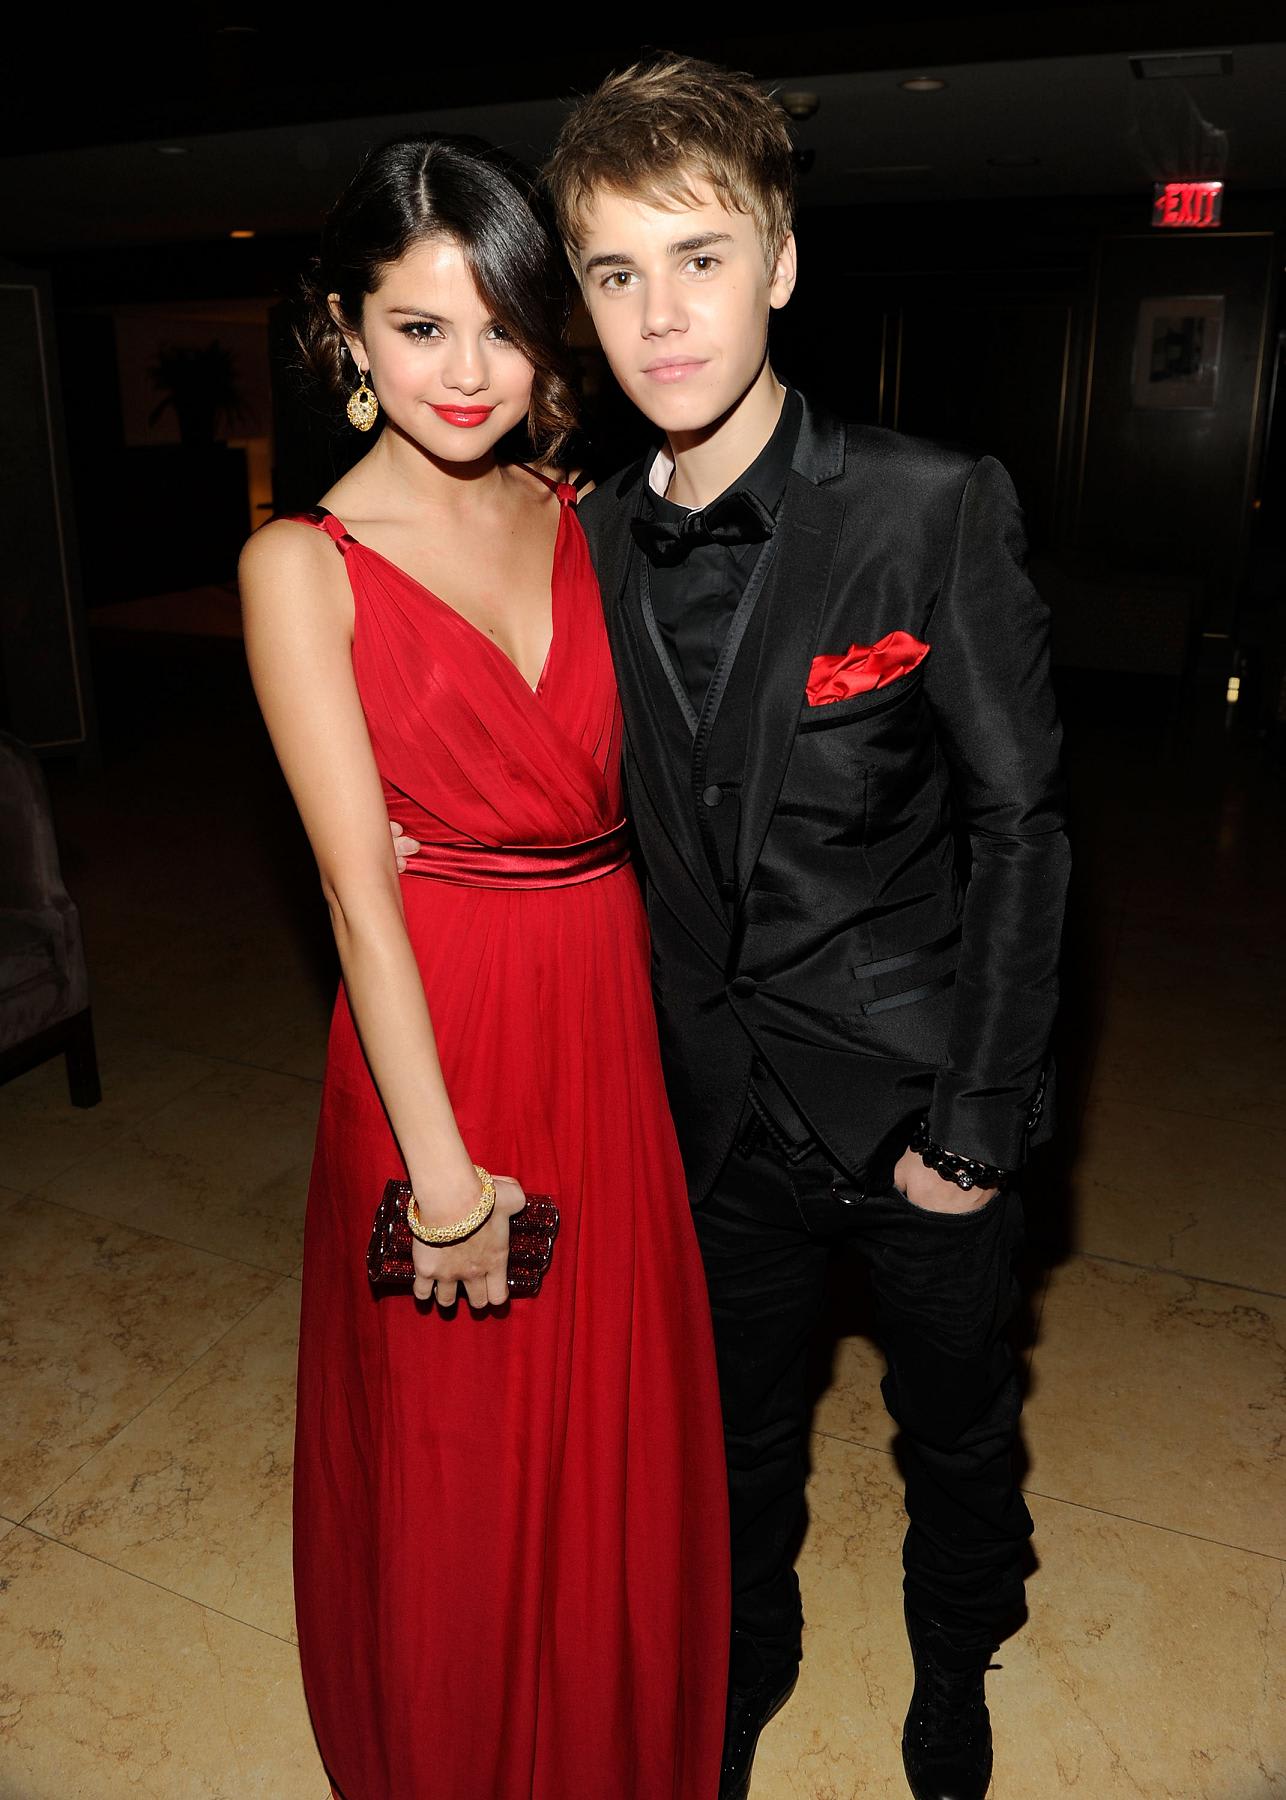 Selena Gomez Oscar Party Inside 27 Feb 11 Favorite Celebrity Pictures